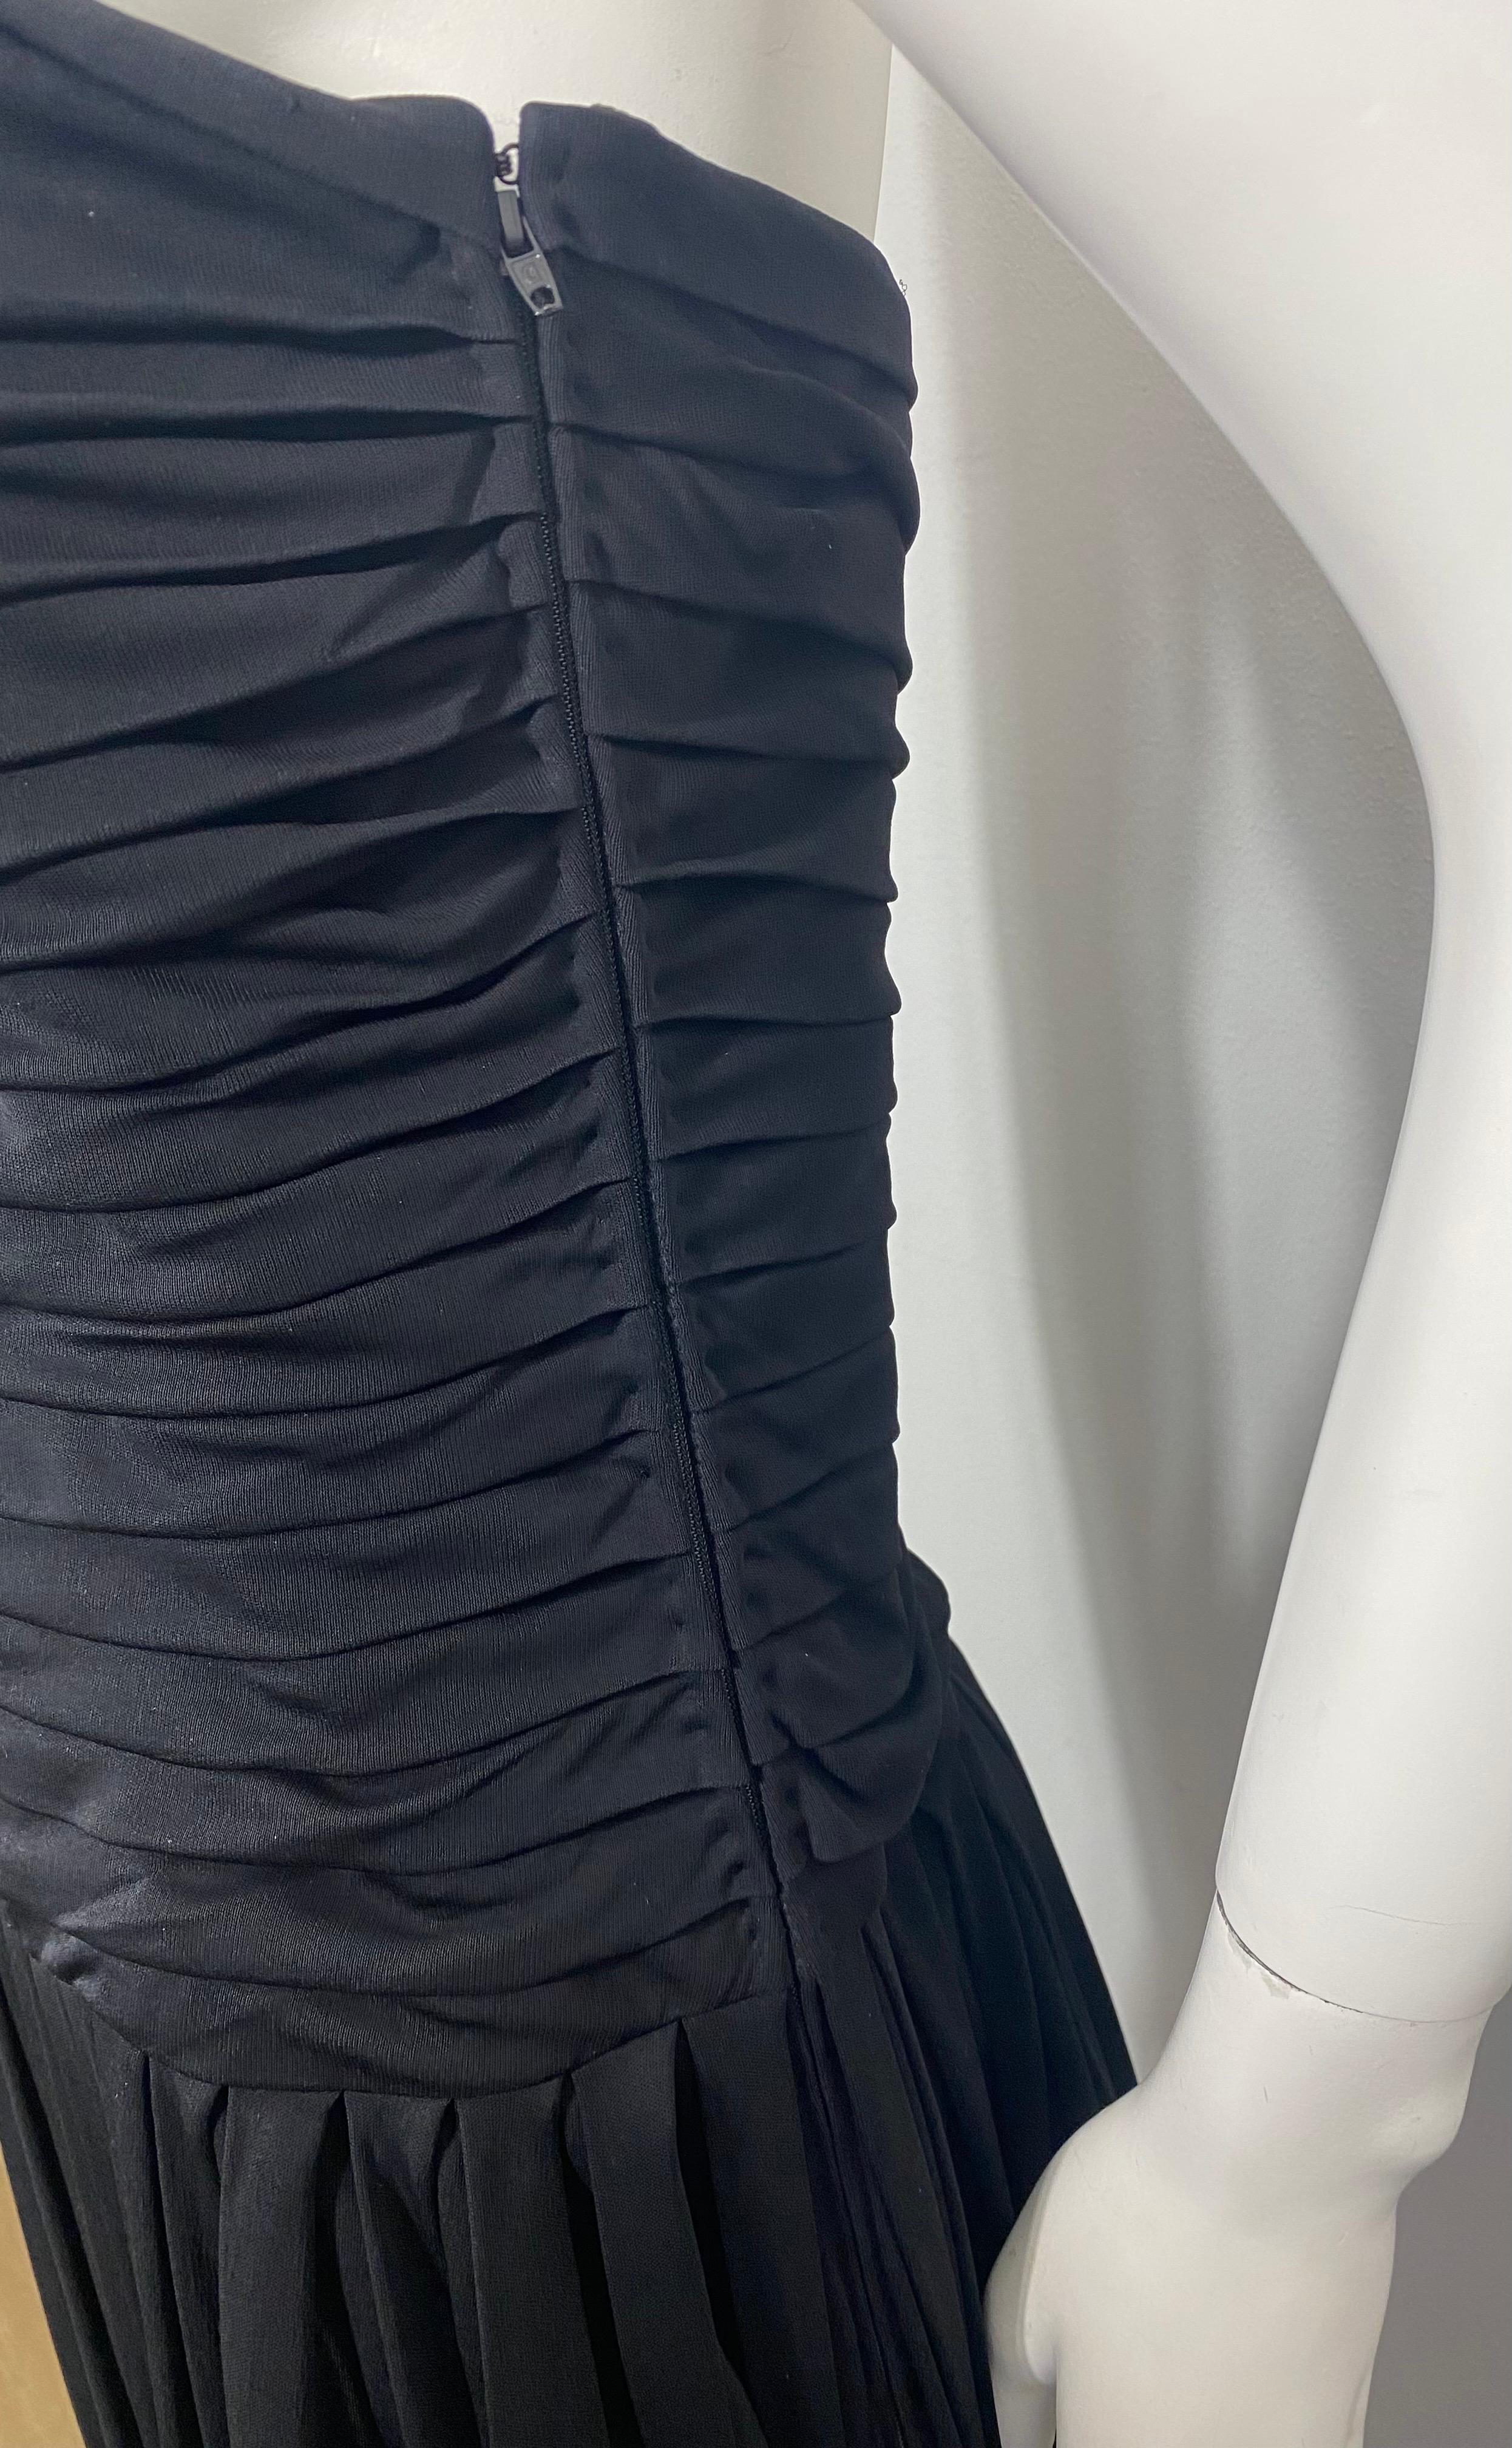 Lanvin 1970’s Black Shutter Pleat Matte Jersey Strapless Long Dress-Size 40 For Sale 1